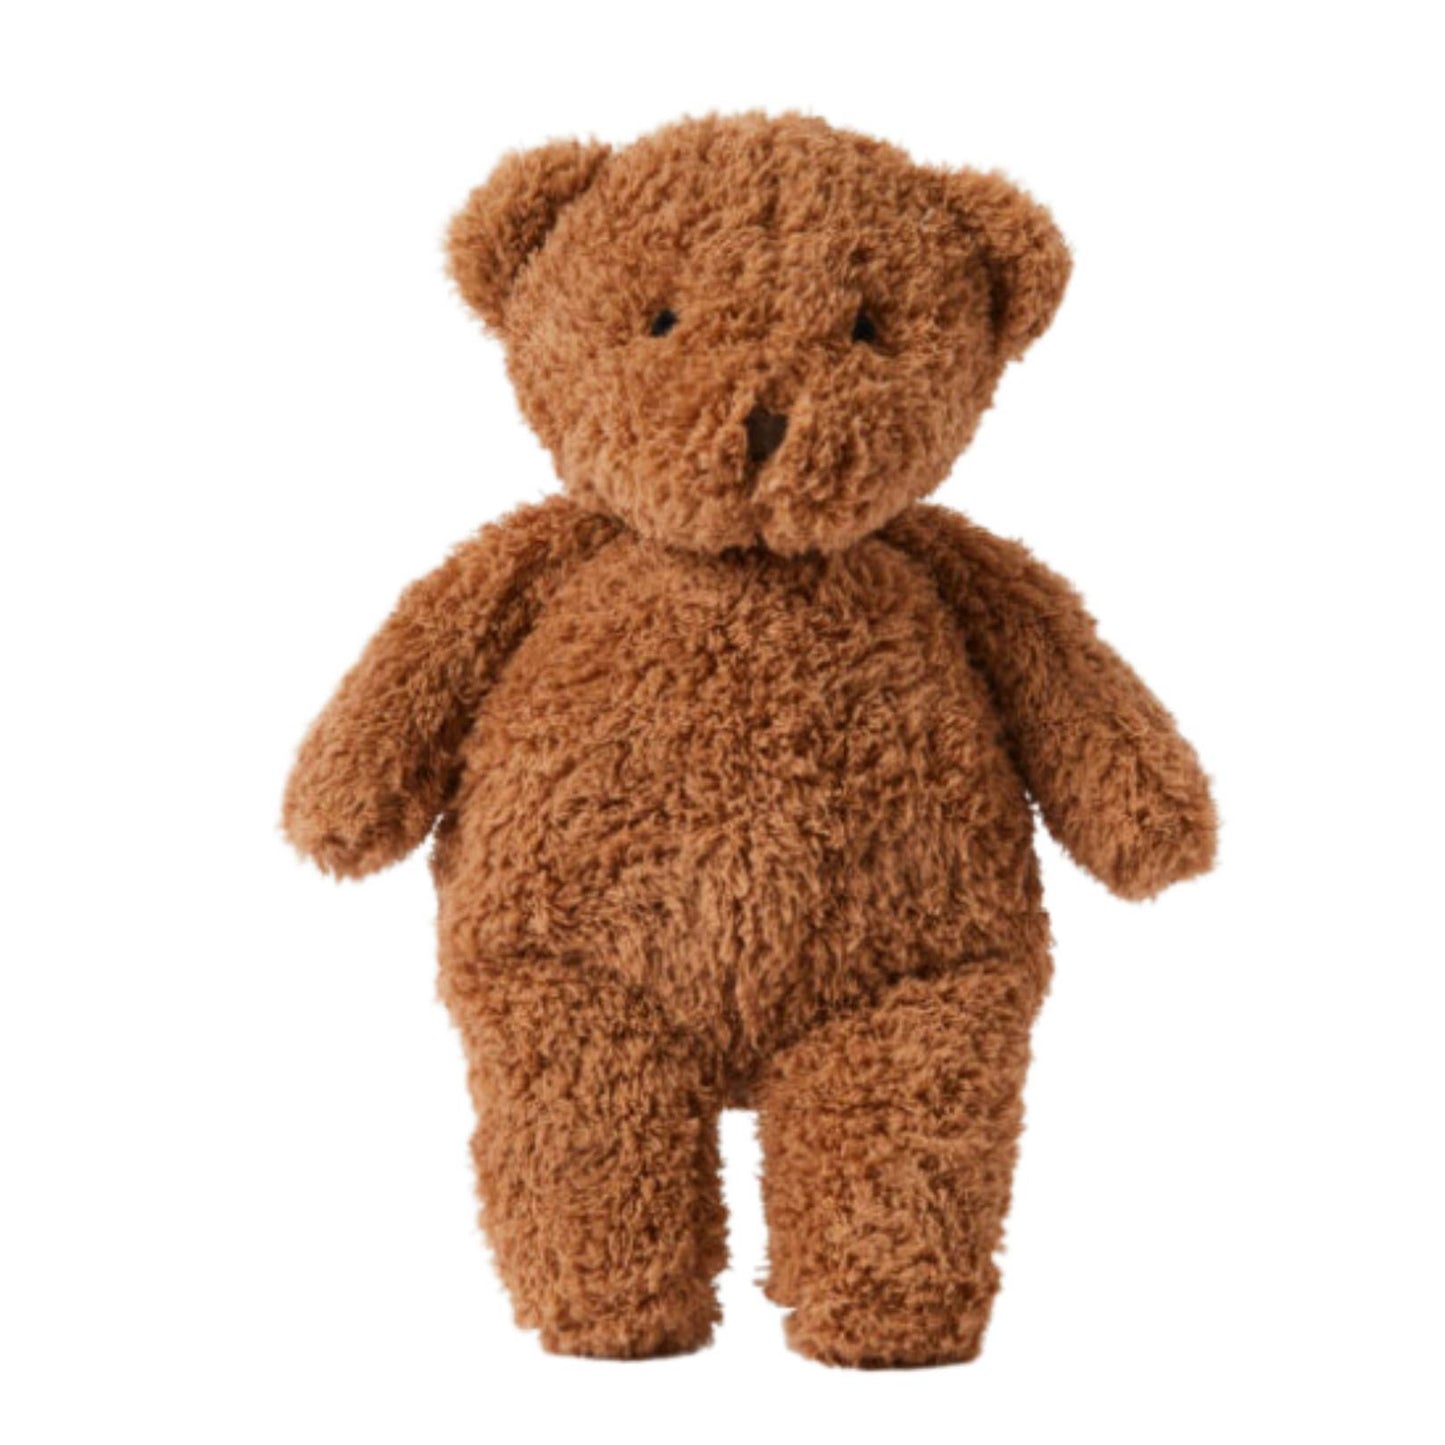 Lulu the Cuddly Bear - Cream or Brown - Jiggle & Giggle